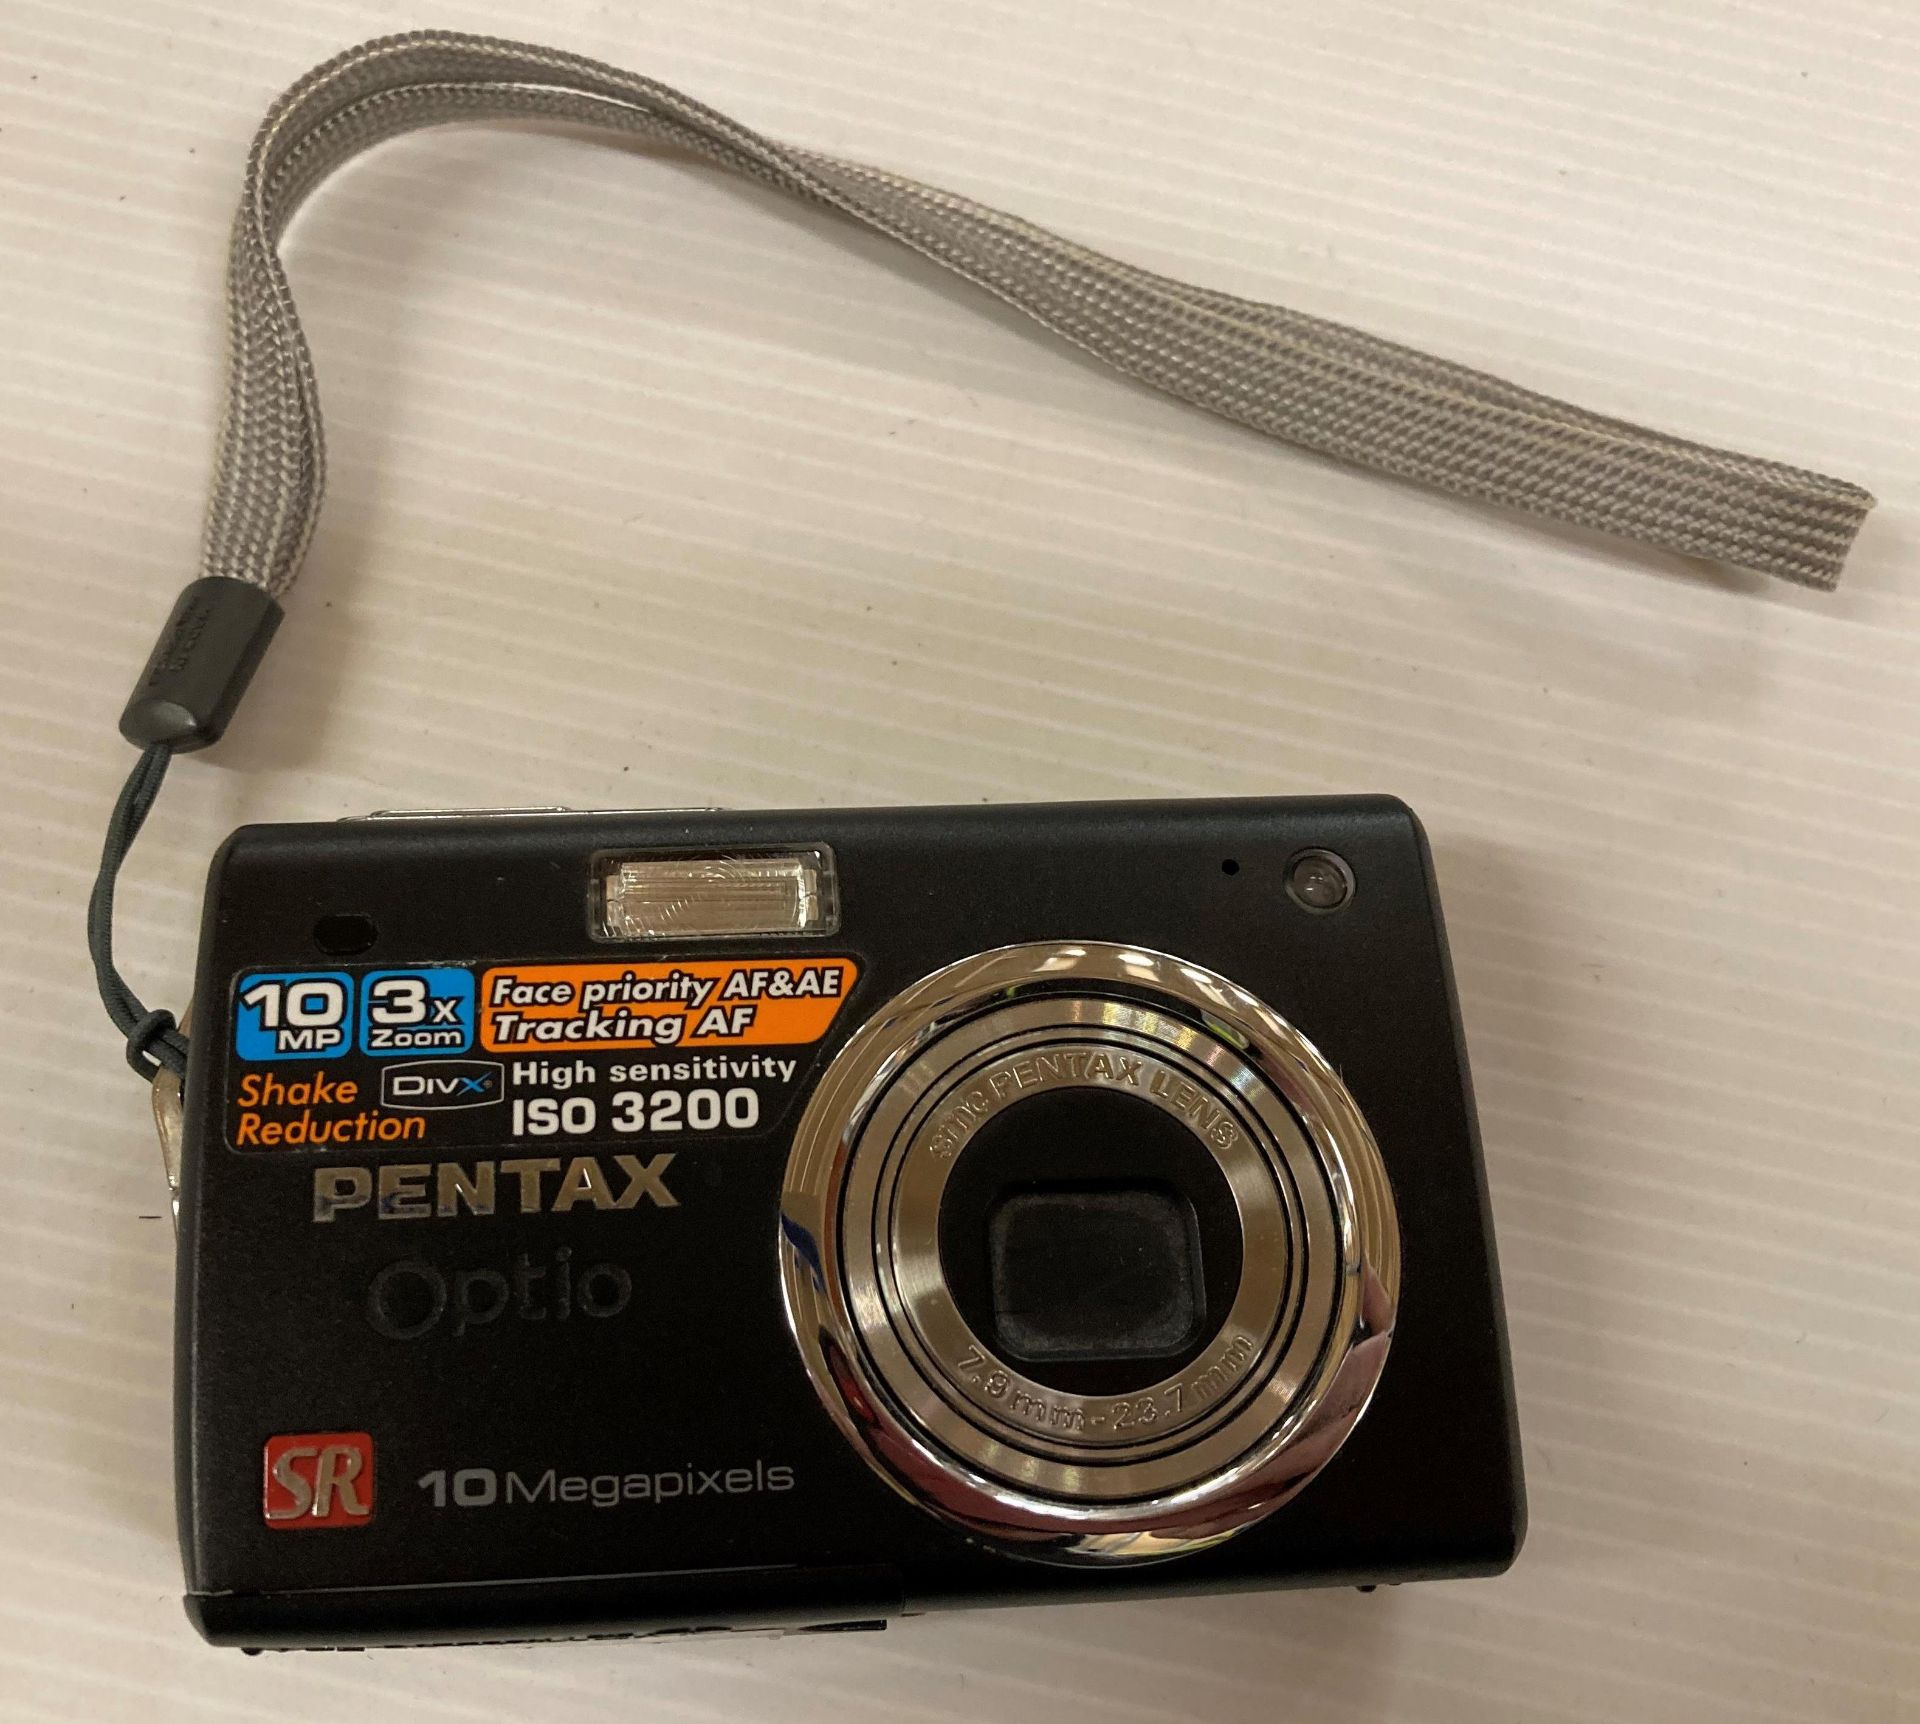 Pentax Optio A30 SR 10 mp 3 x zoom digital camera (saleroom location: R11)